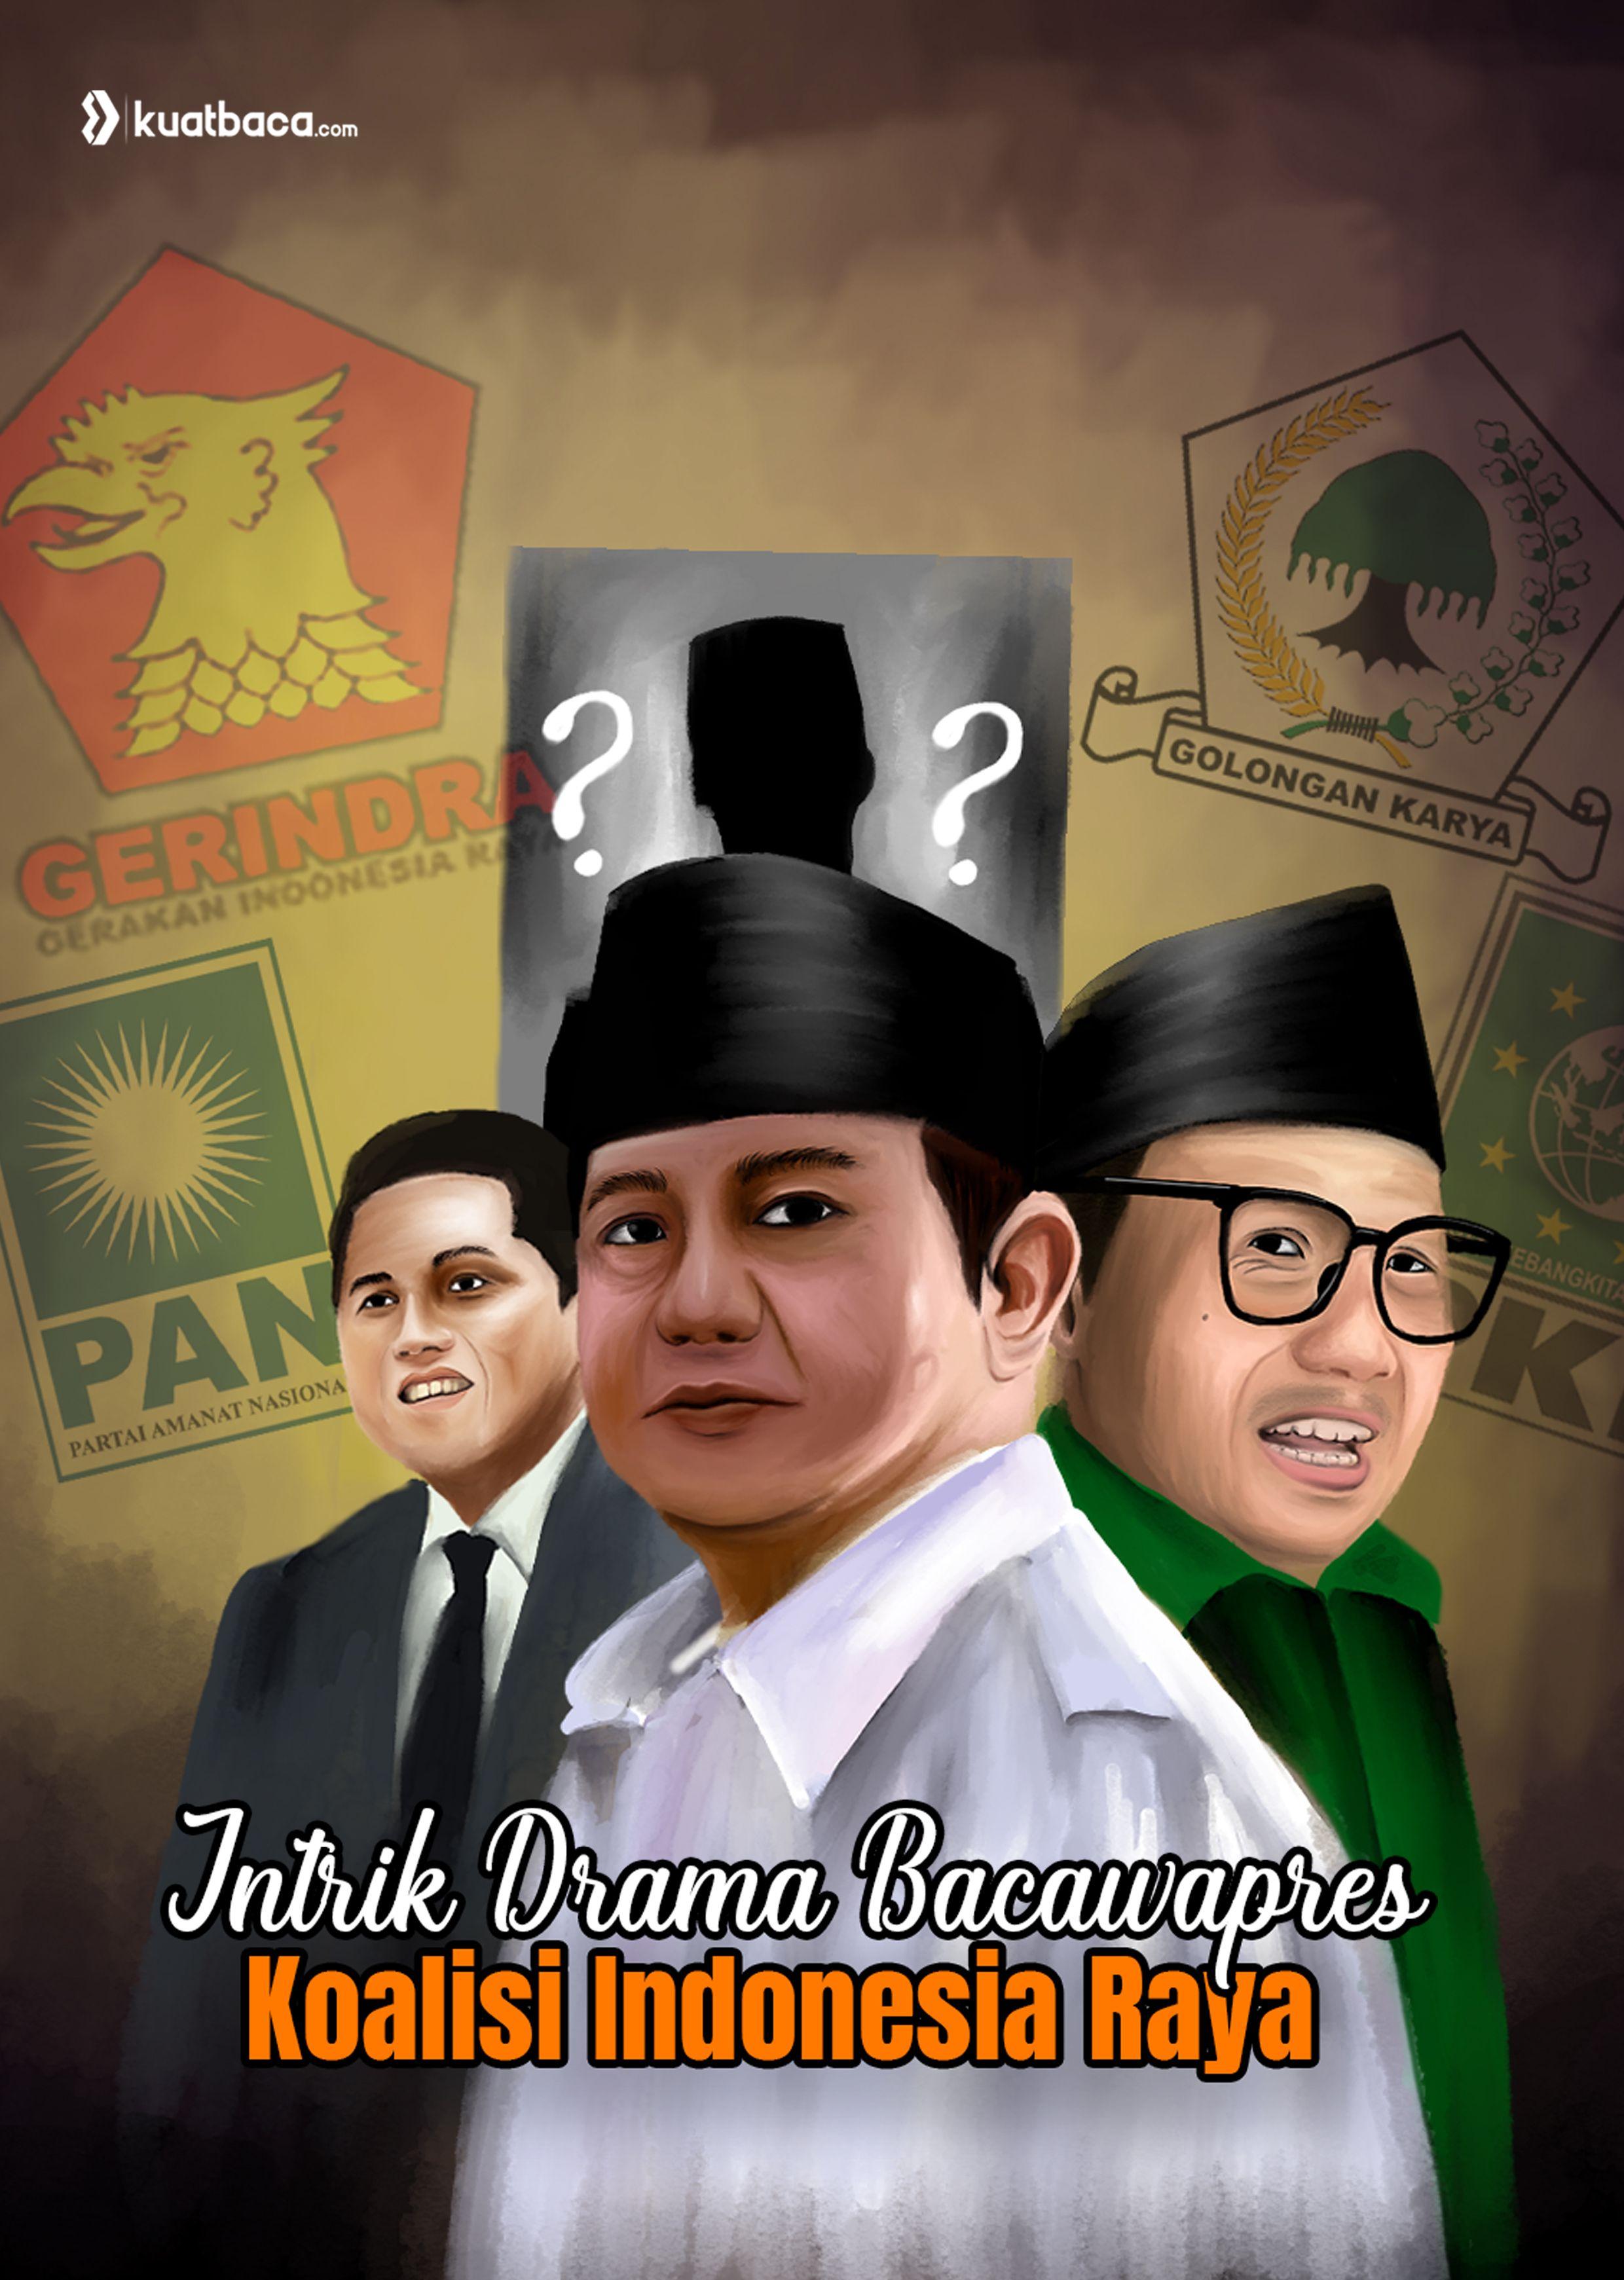 Intrik Drama Bacawapres Koalisi Indonesia Raya